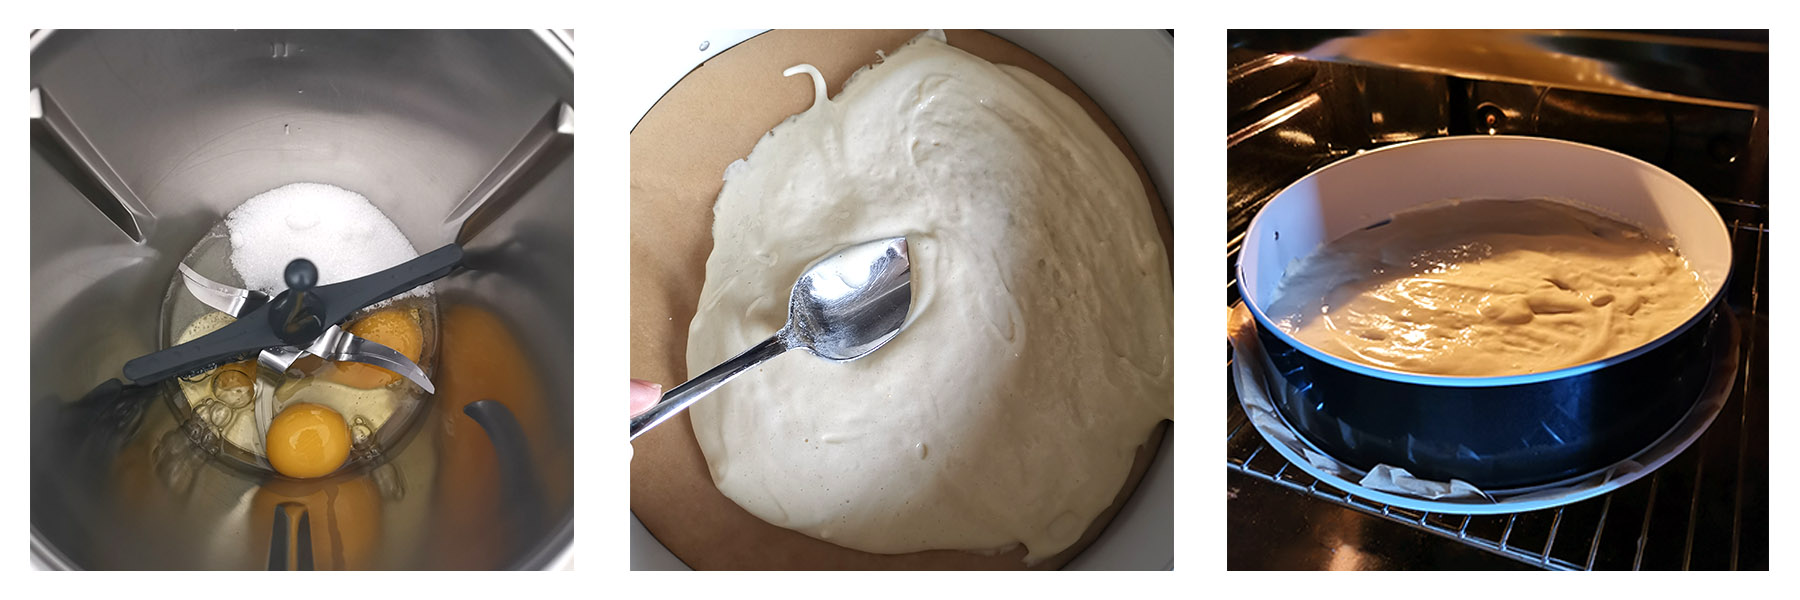 Brombeer-Cheesecake Zubereitung 01